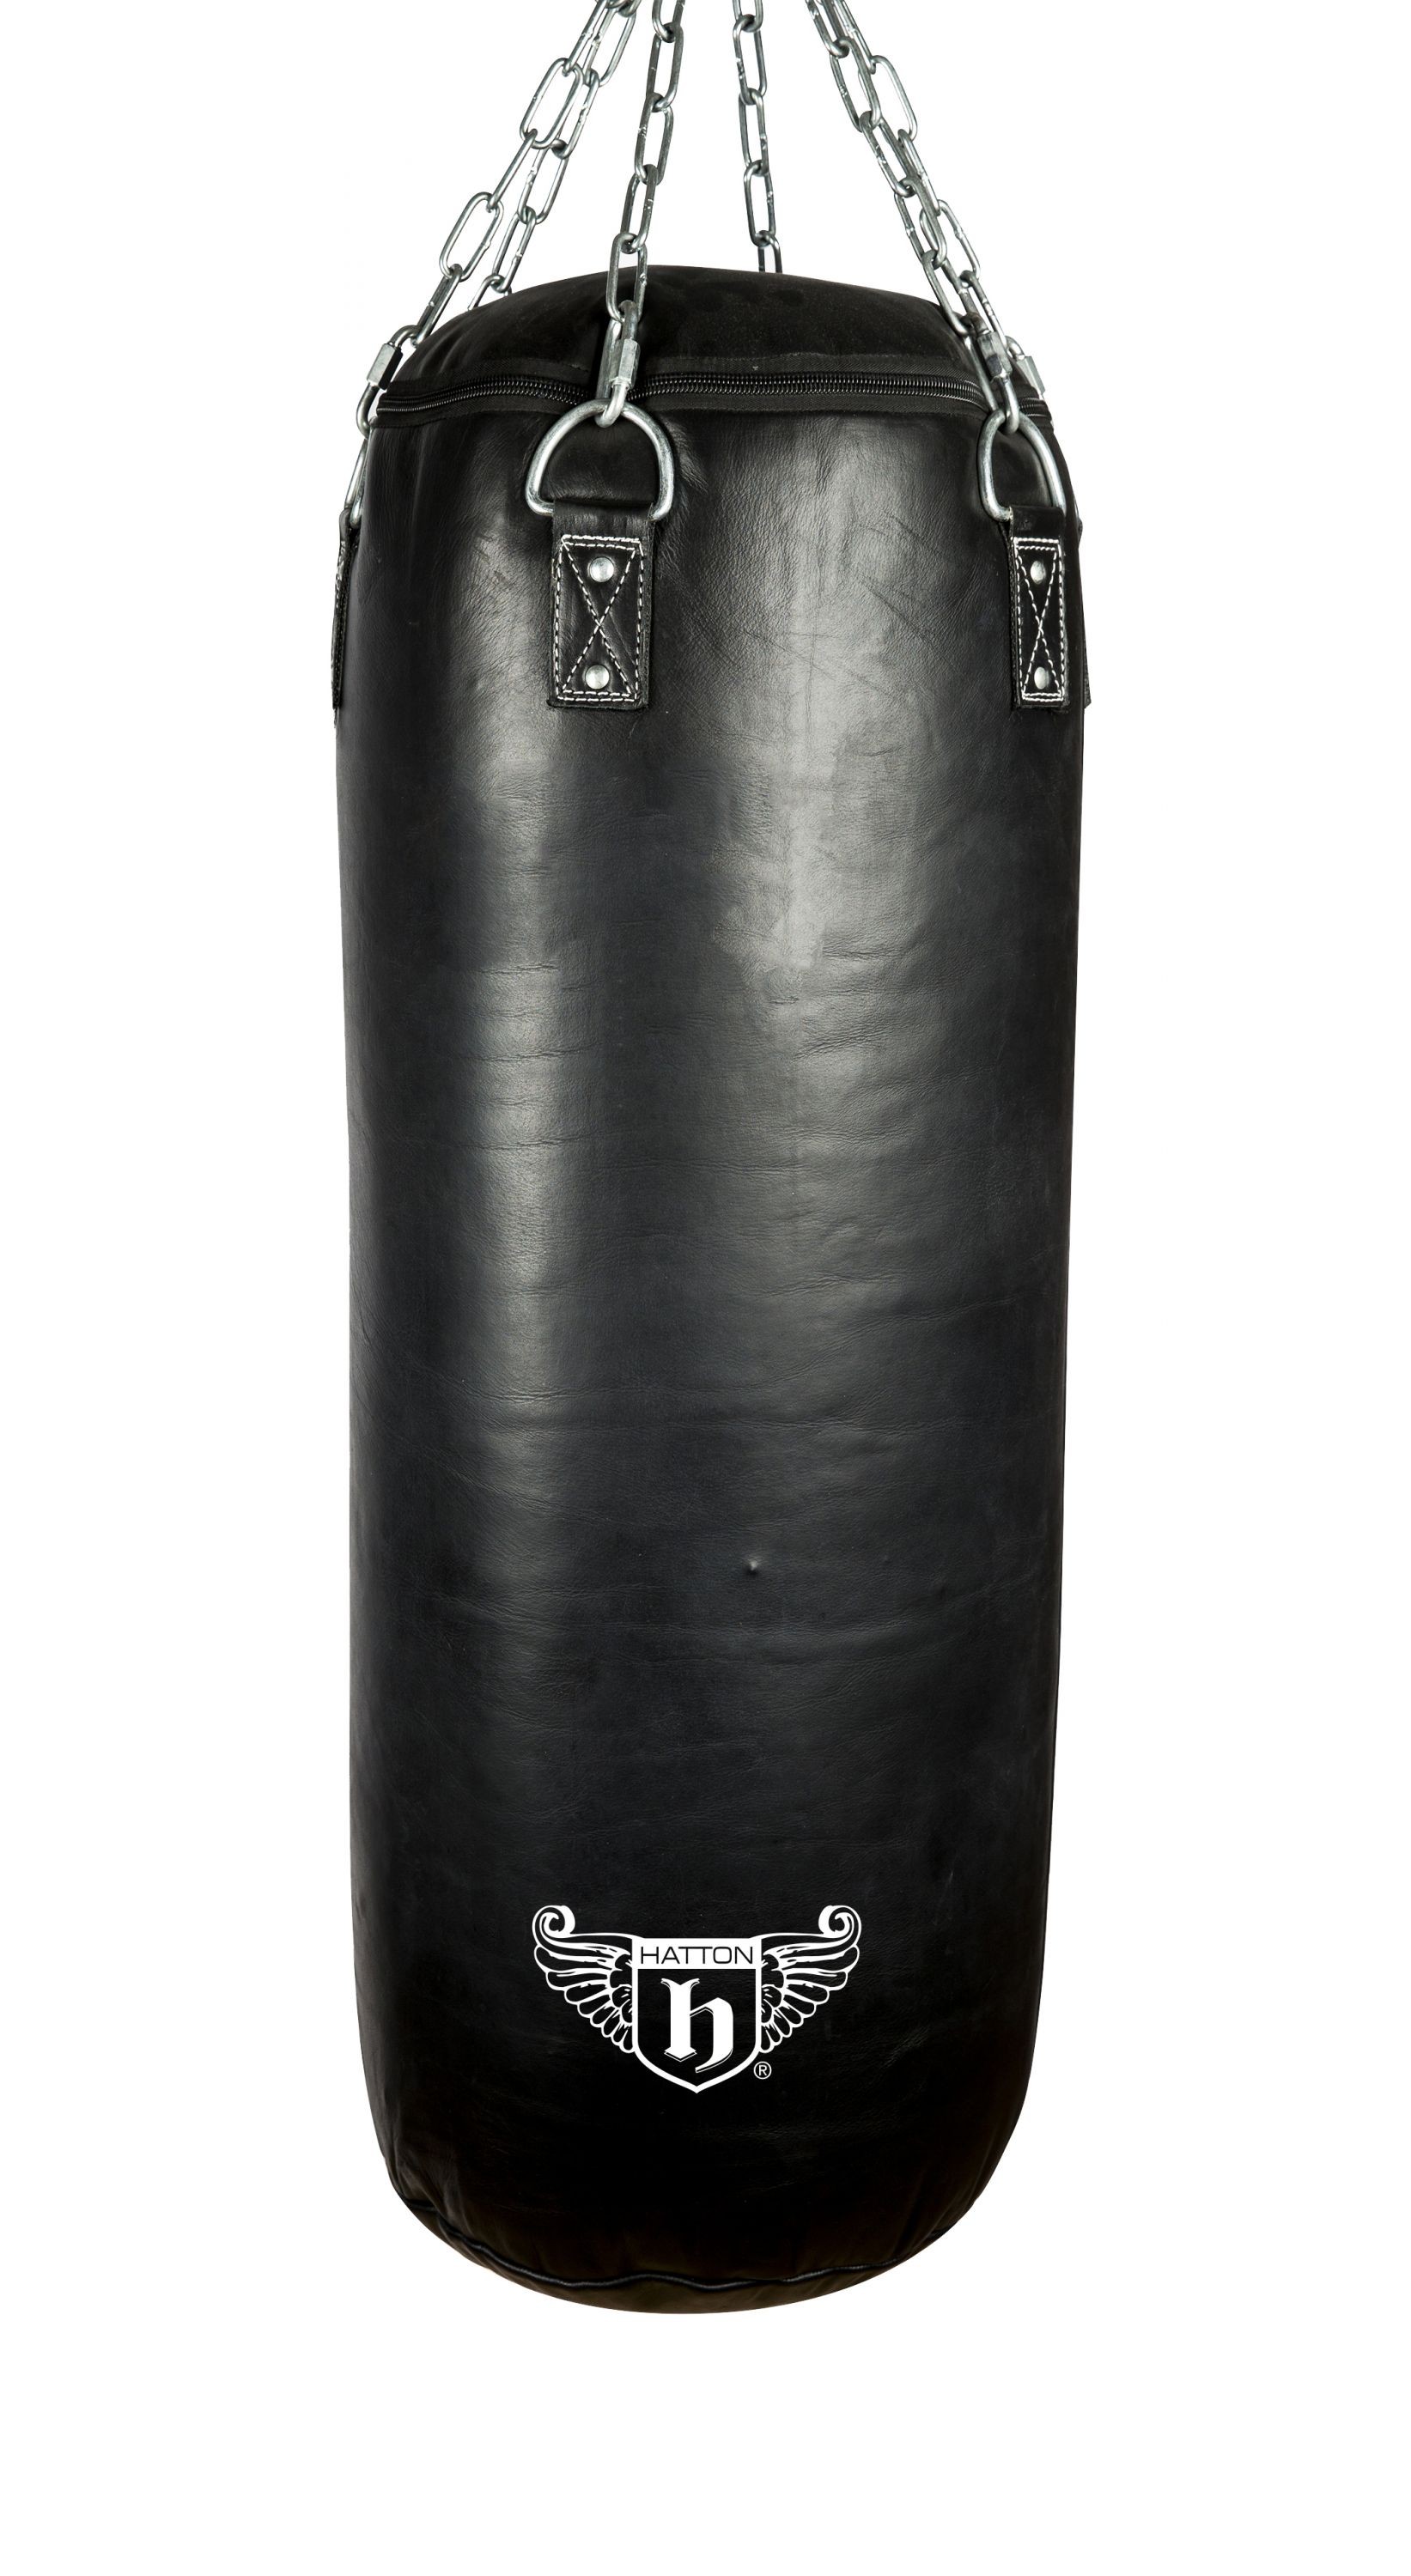 bezoeker ophouden Brein Hatton Heavy bag 100 x 40 Leather kopen? Ga voor kwaliteit | AStepAhead -  Hatton Heavy Duty Punch Bag - AStepAhead